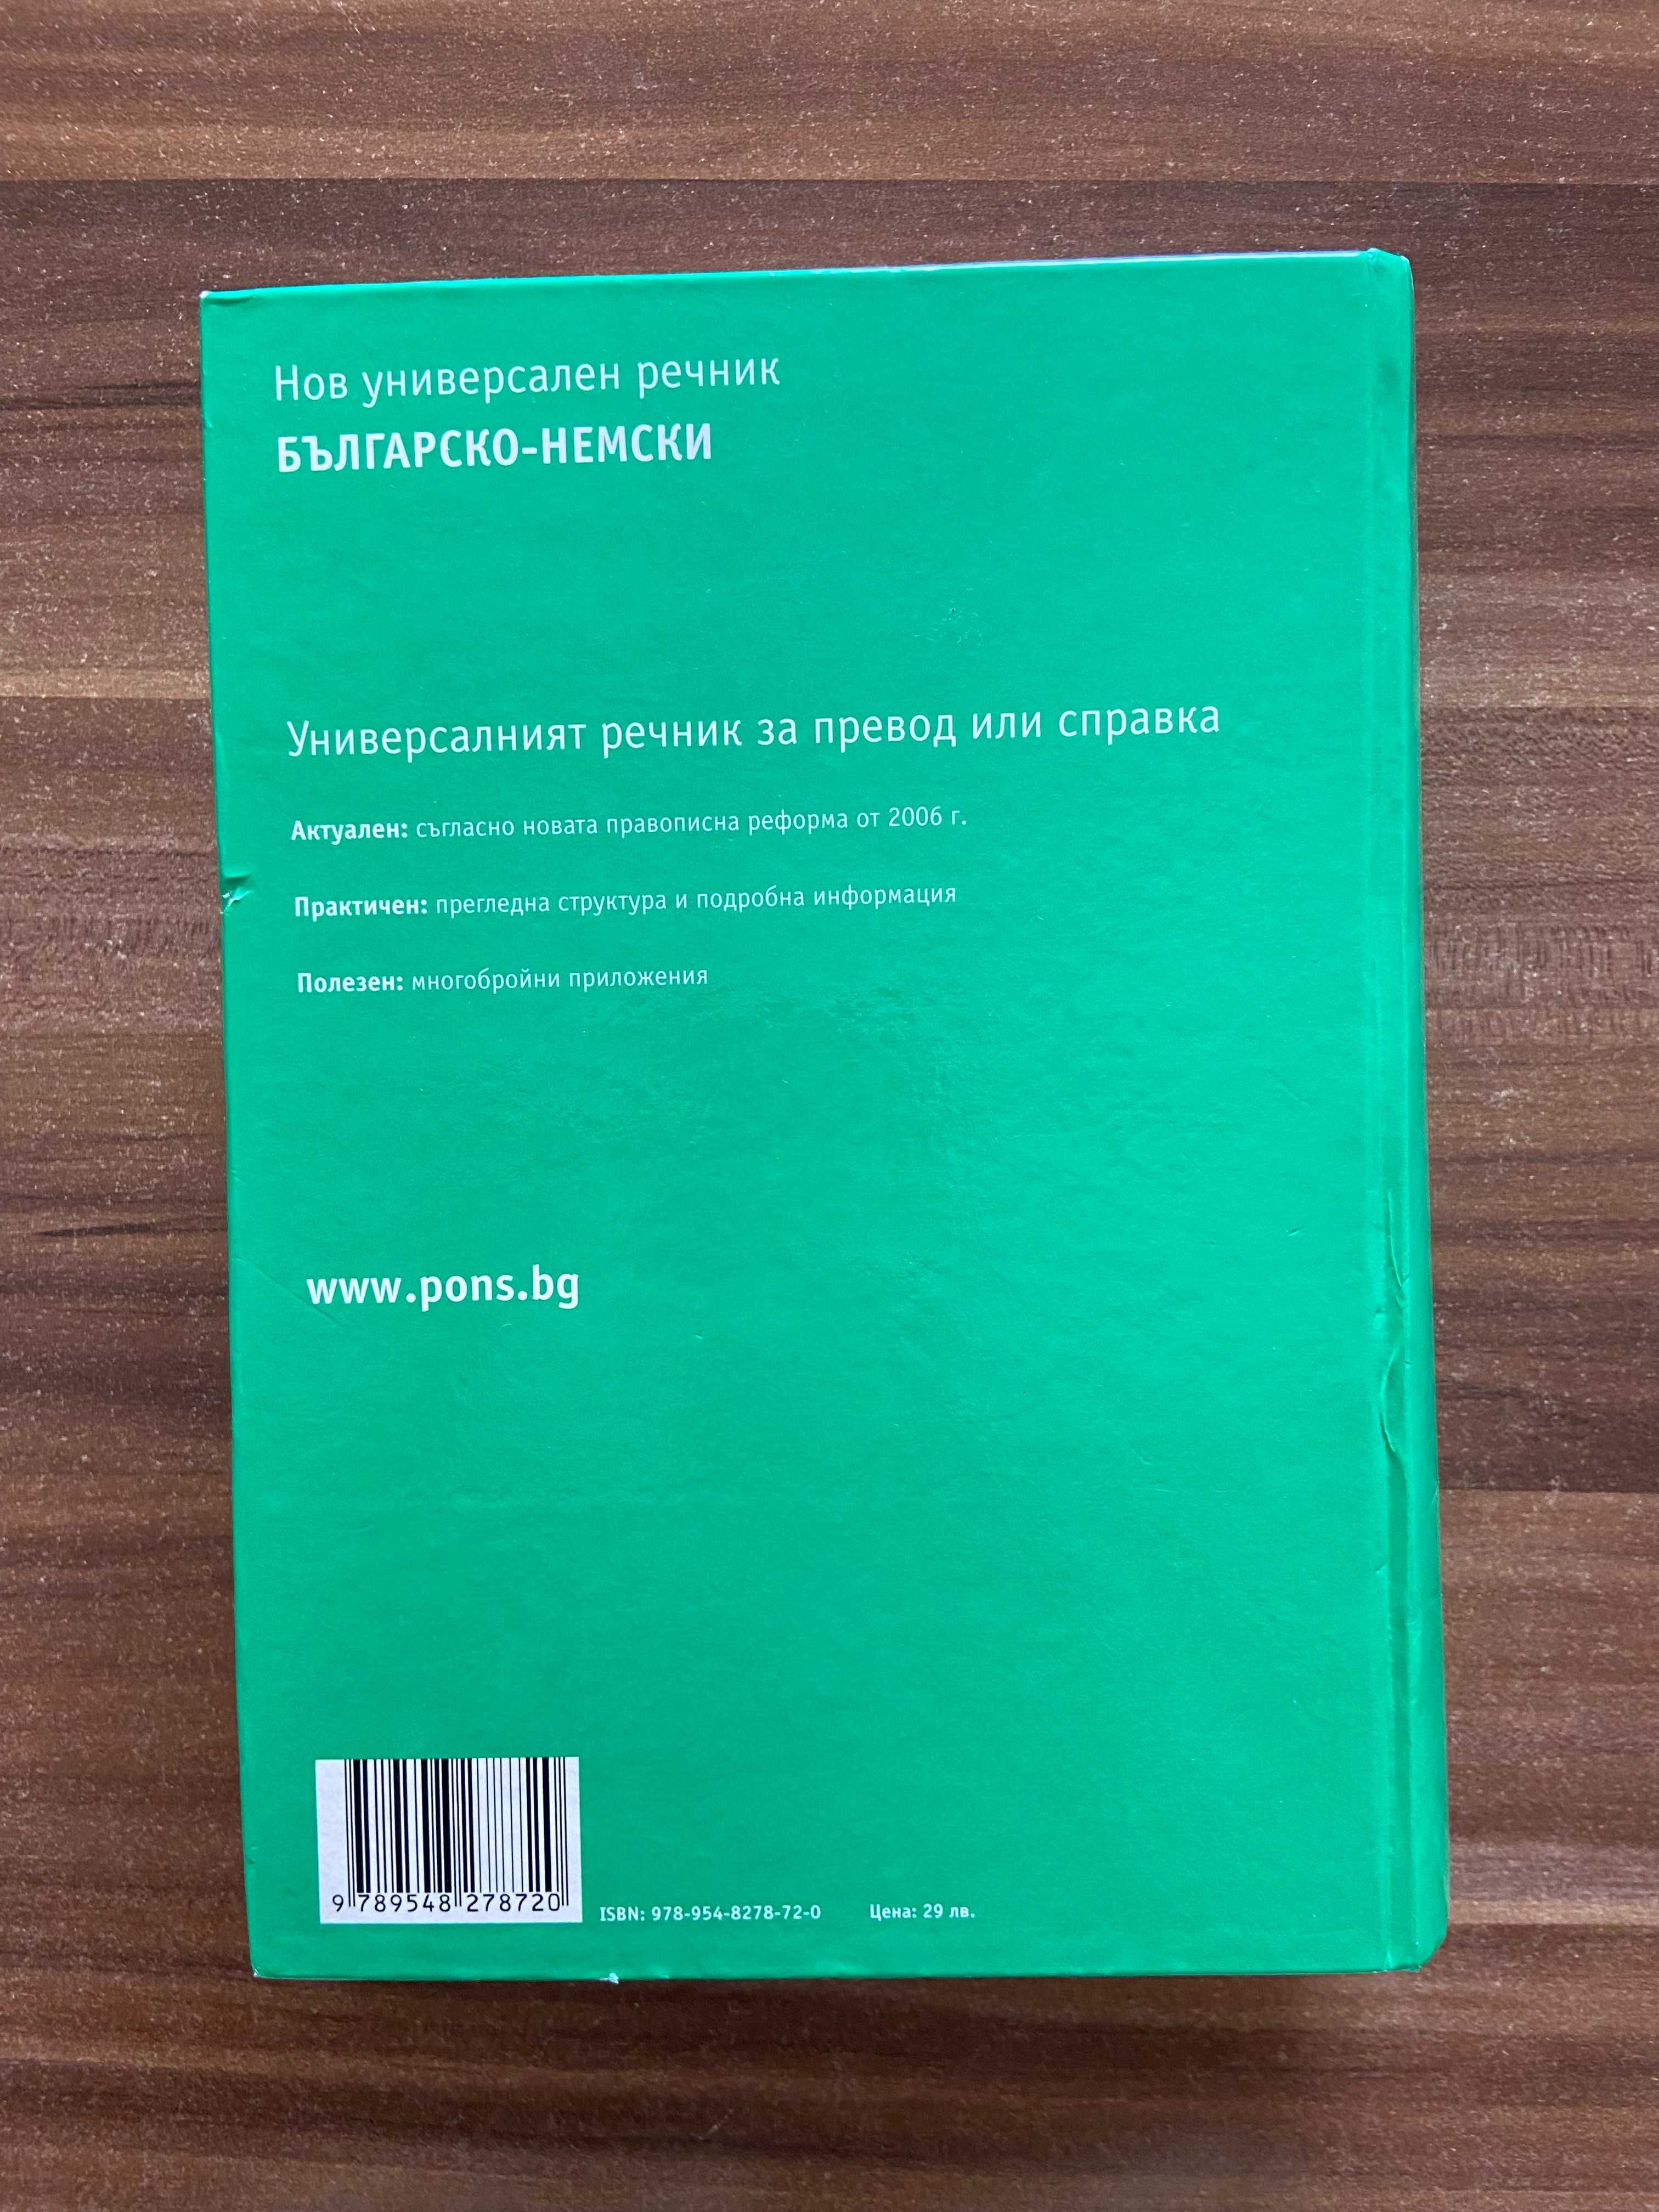 Българско-немски и речник на PONS